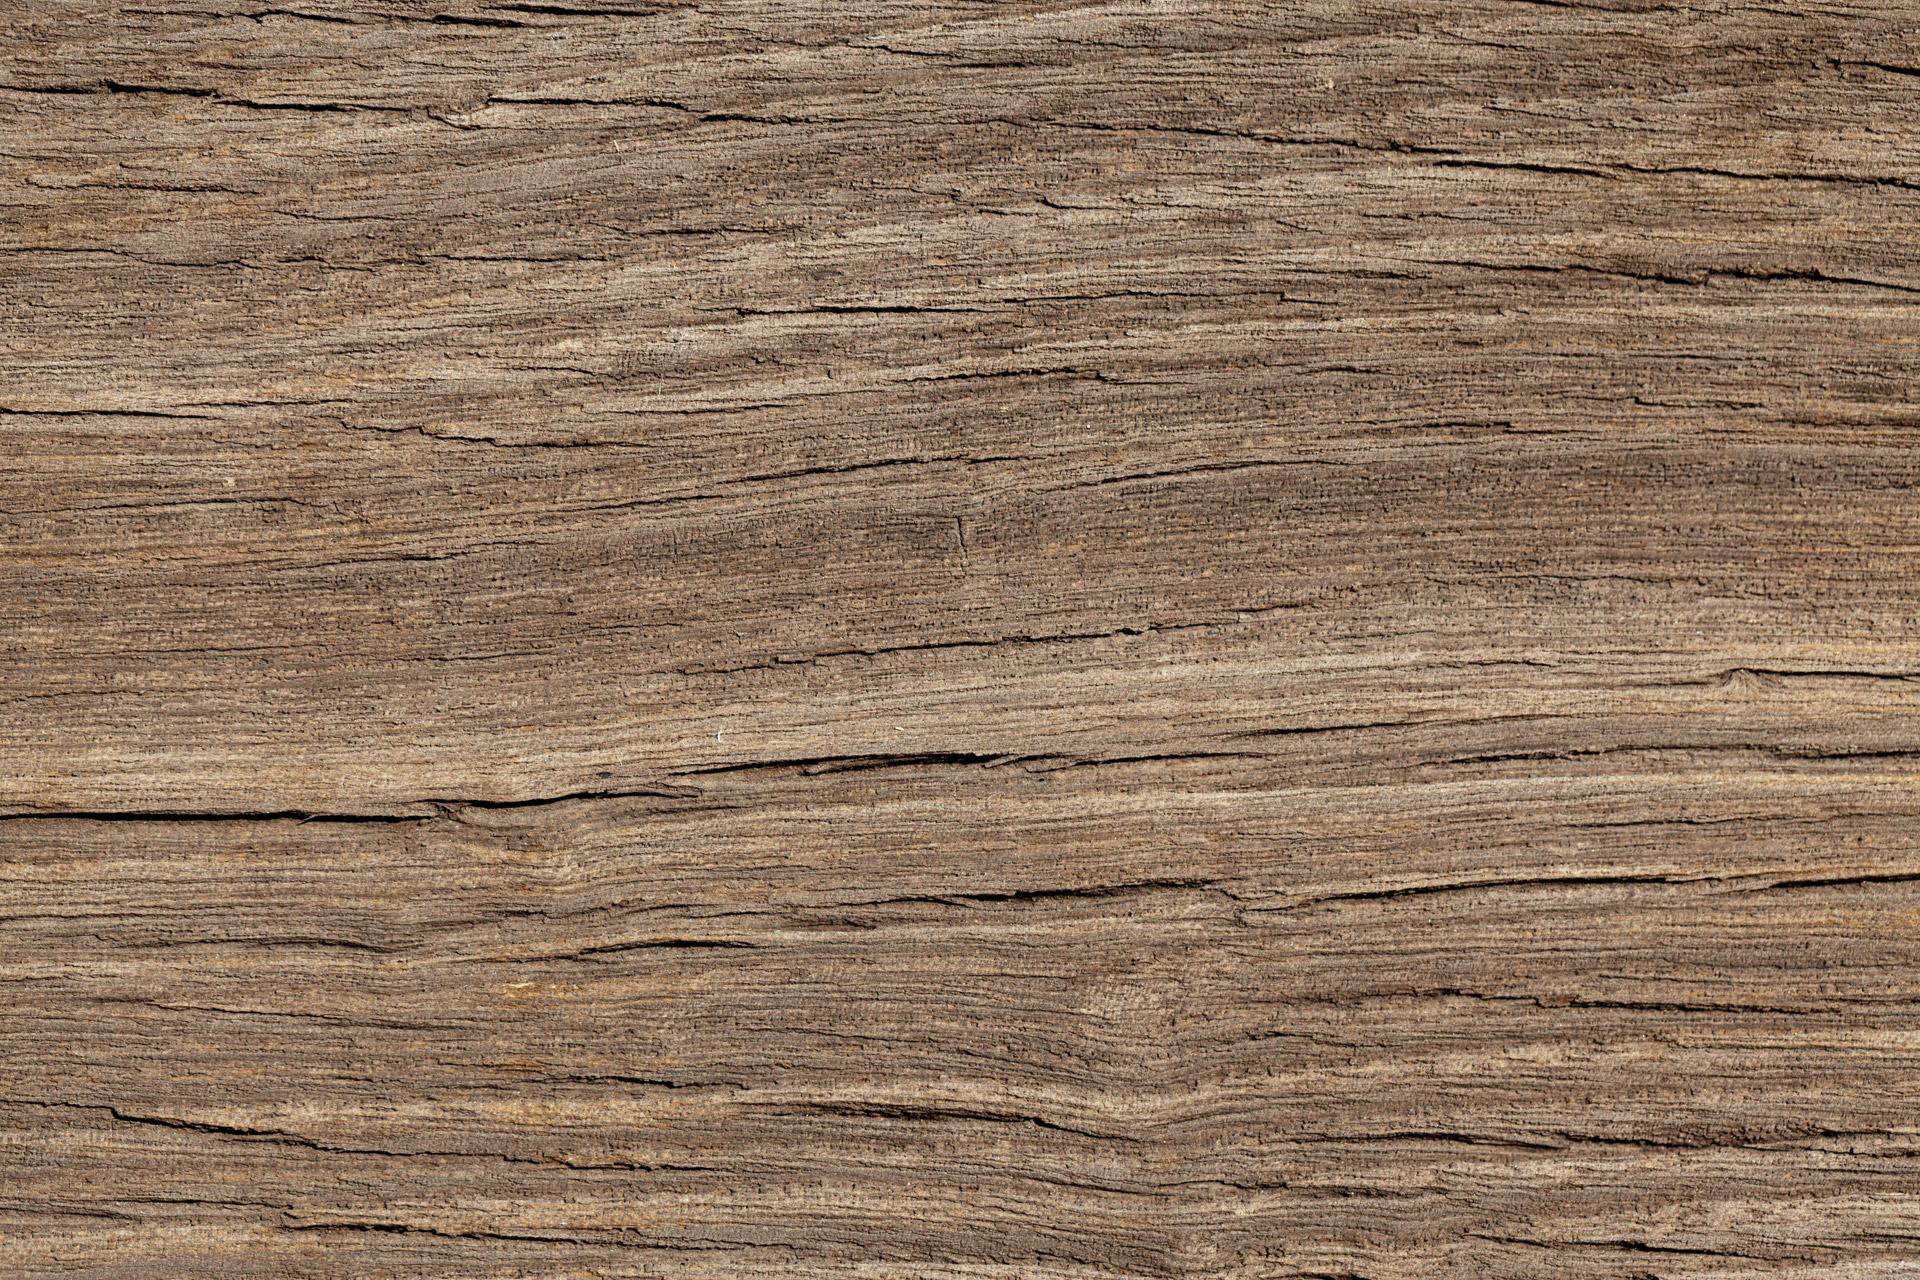 Wood Texture Public Domain Picture Template PPT Backgrounds